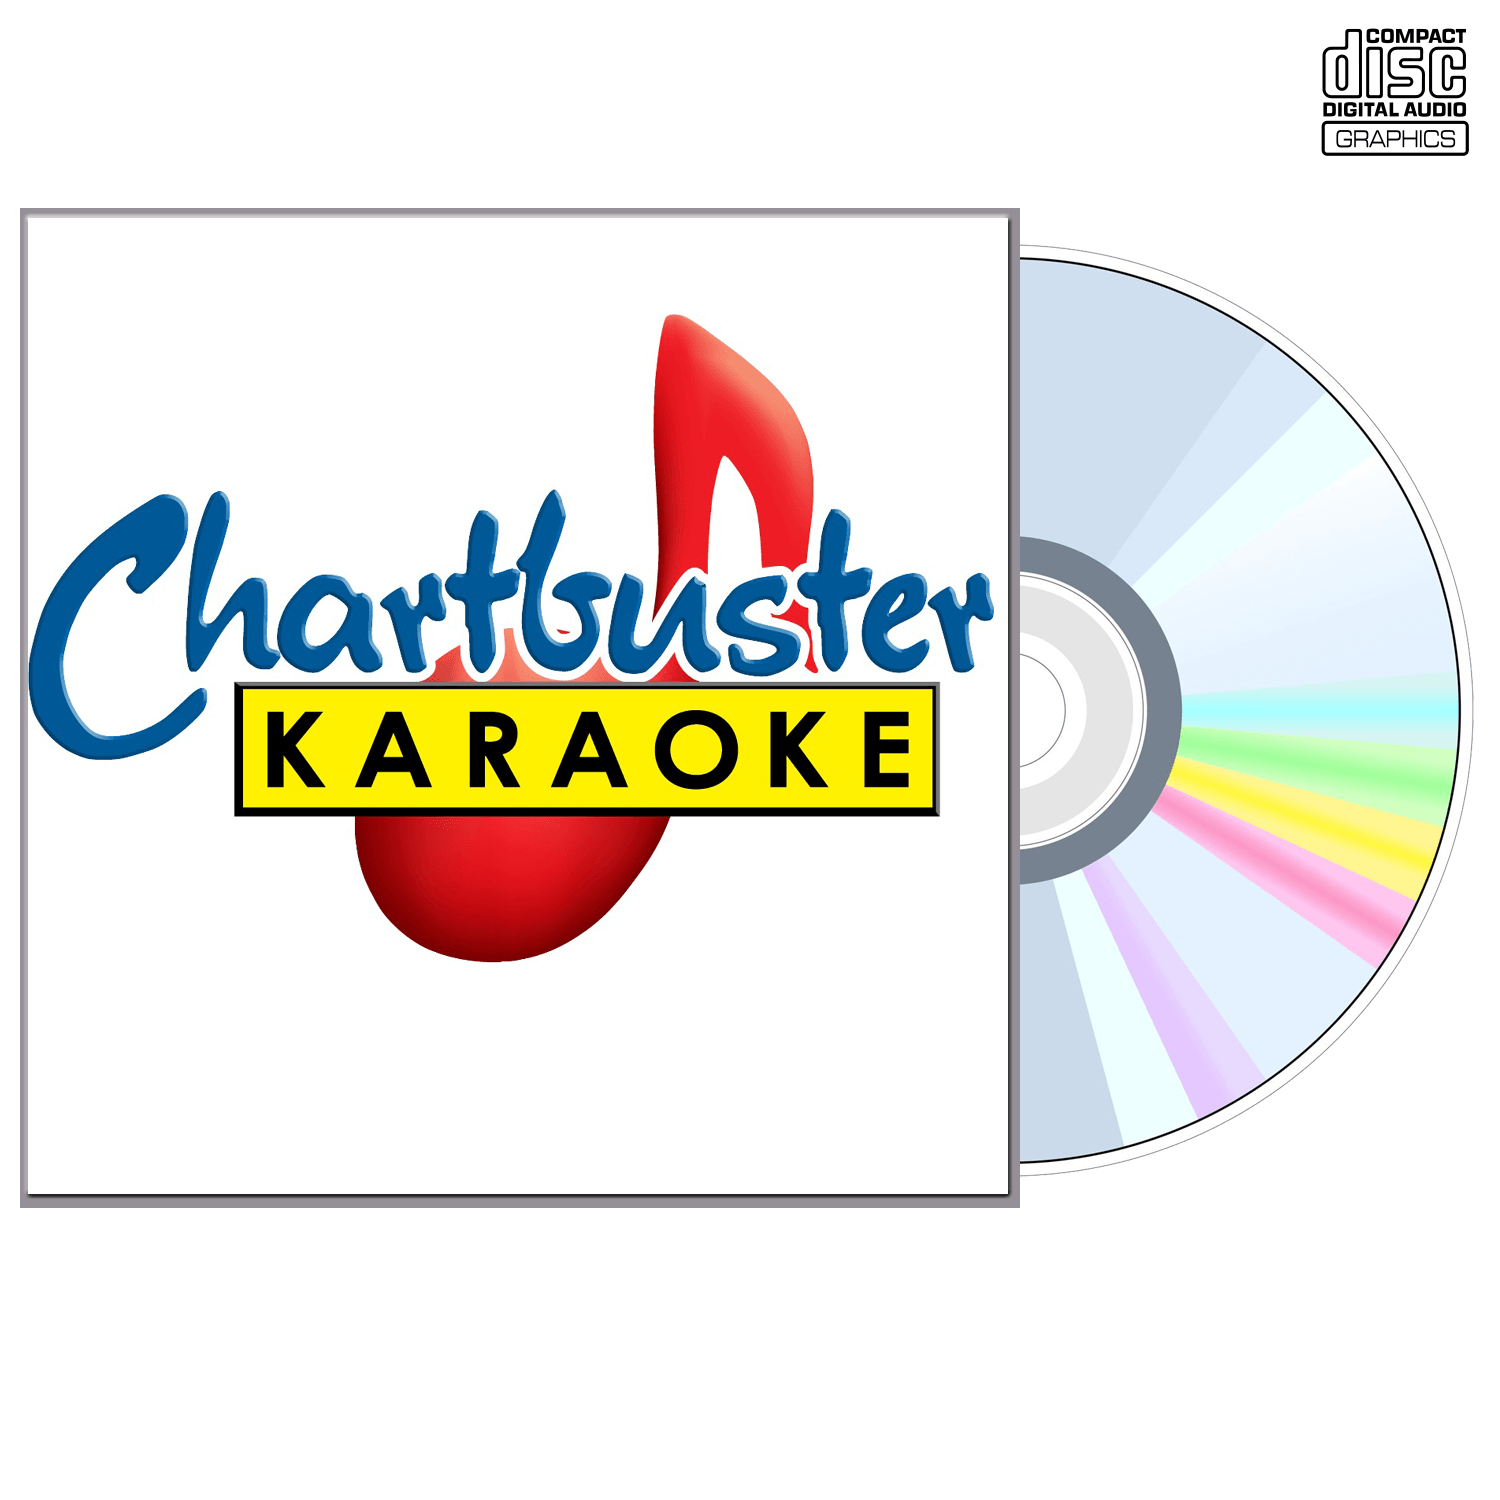 Best Of Backstreet Boys - CD+G - Chartbuster Karaoke - Karaoke Home Entertainment